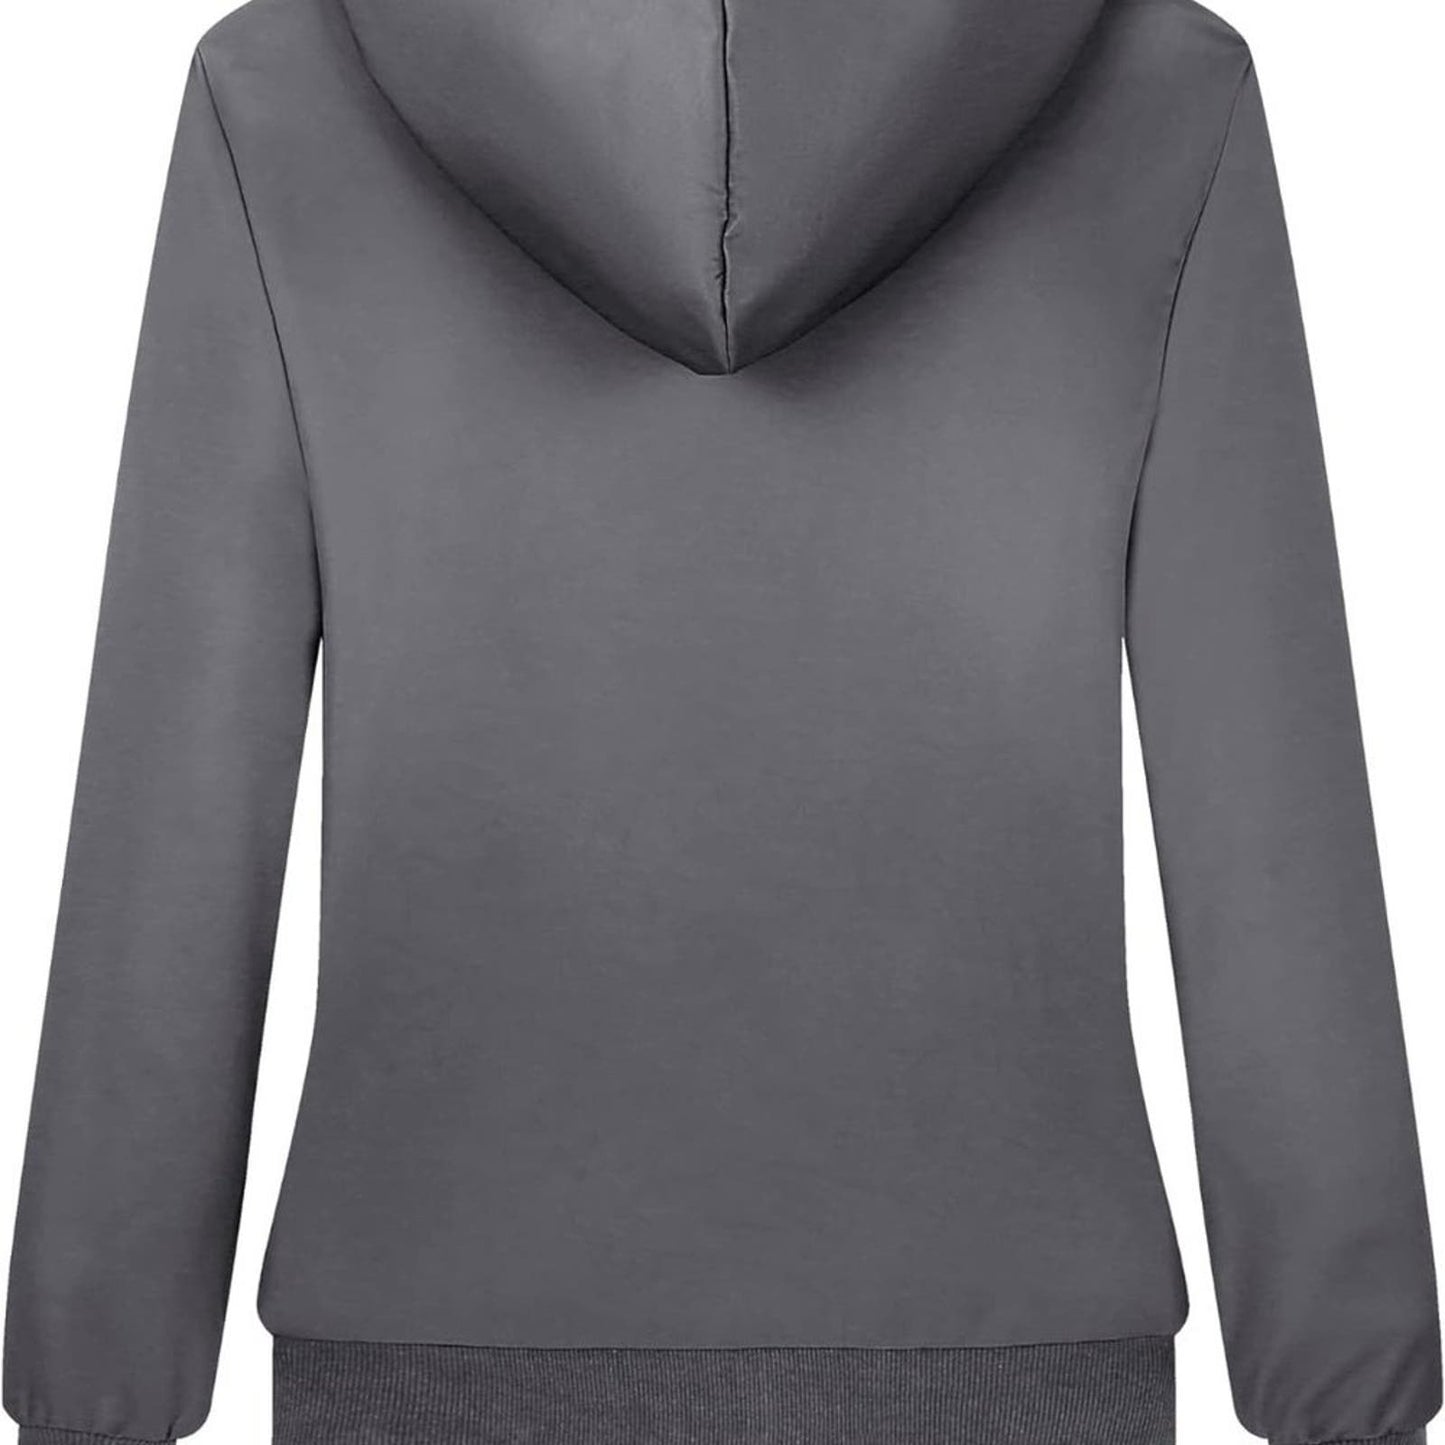 JACKETOWN Zip Up Hoodies for Women Warm Fall Winter Fleece Jacket Casual Hooded